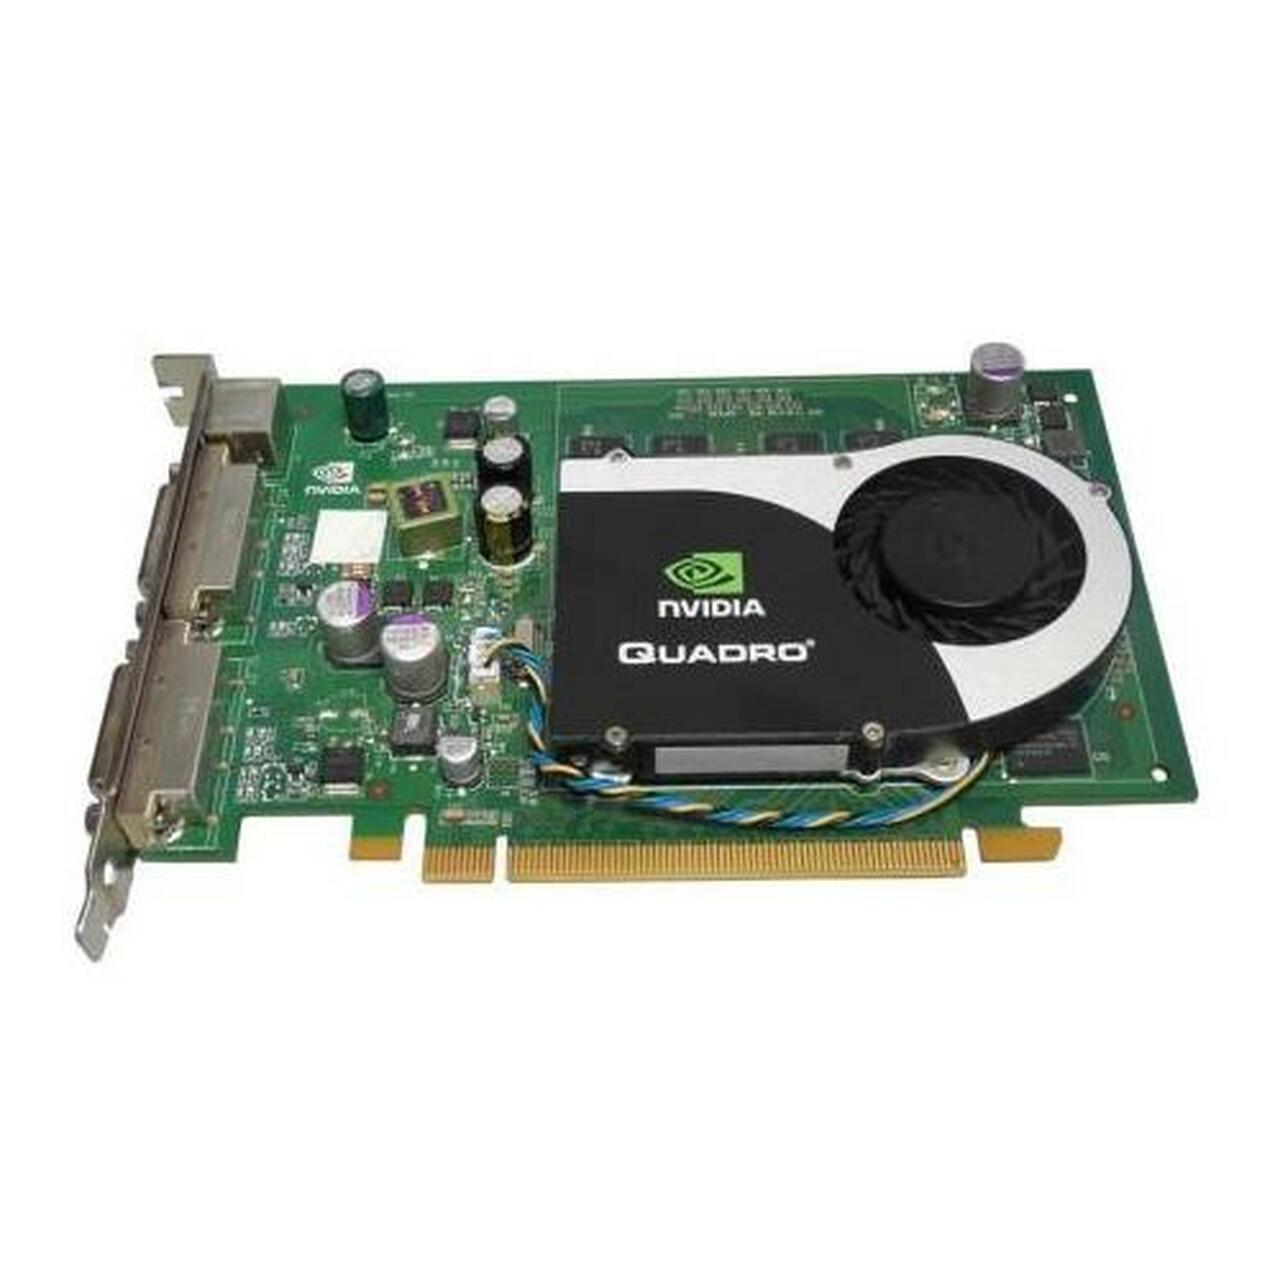 nVidia Quadro FX1700 512MB dual DVI Graphics Card, Dell Precision 320-5868